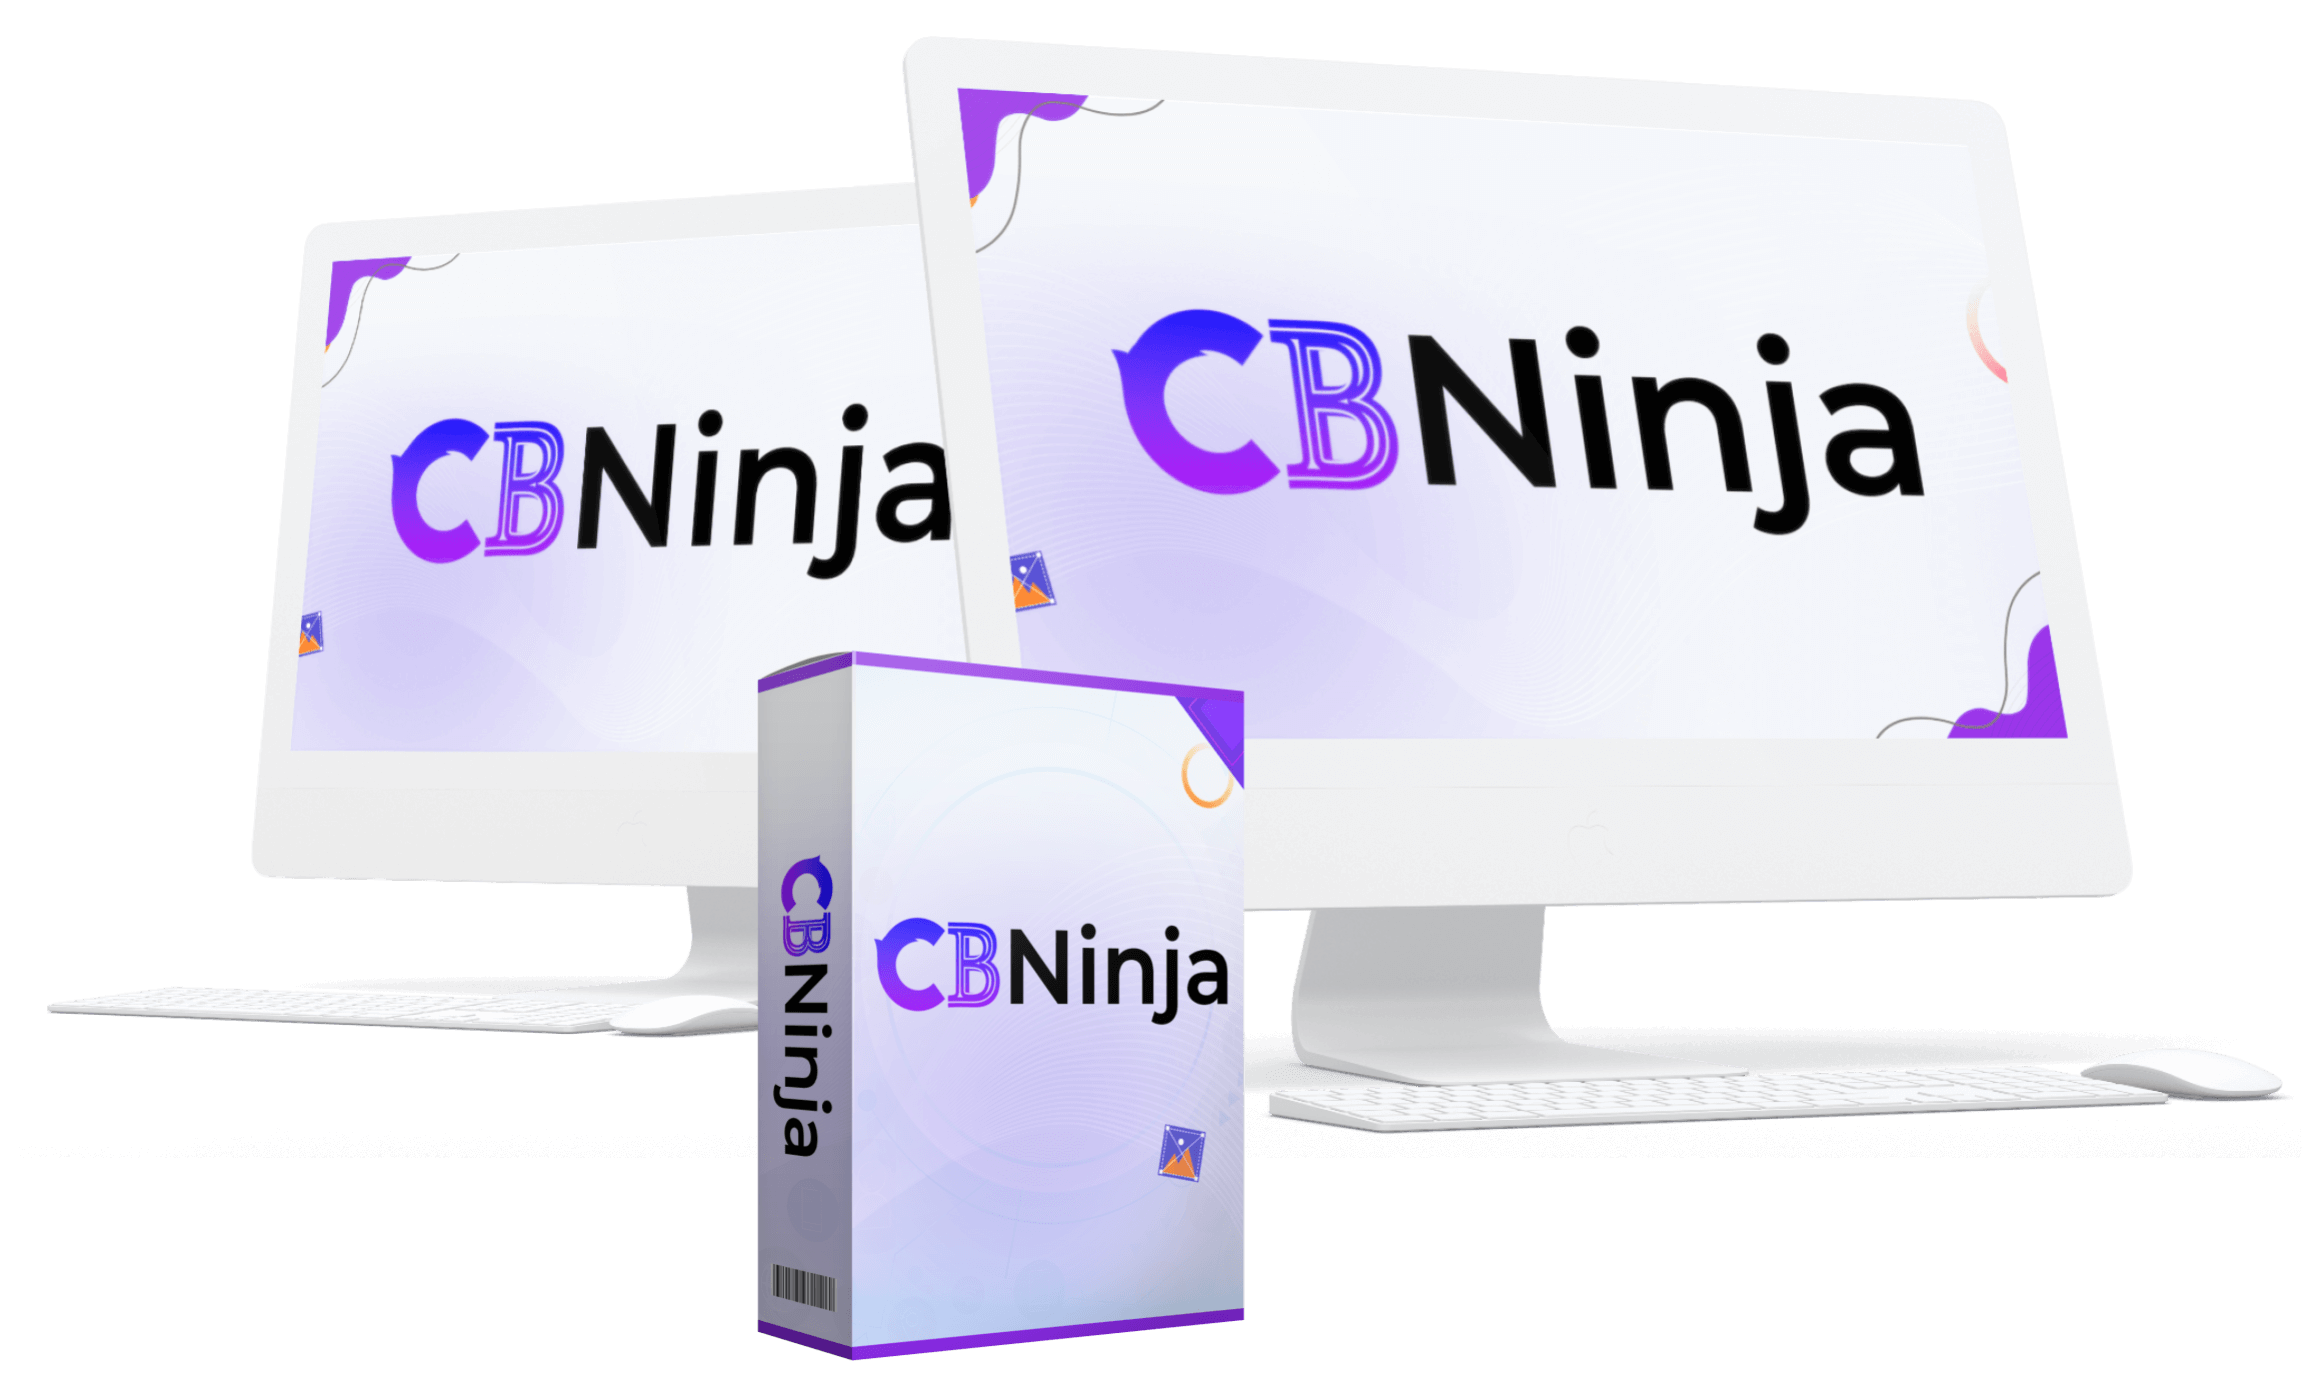 CB Ninja – Confirmed launch